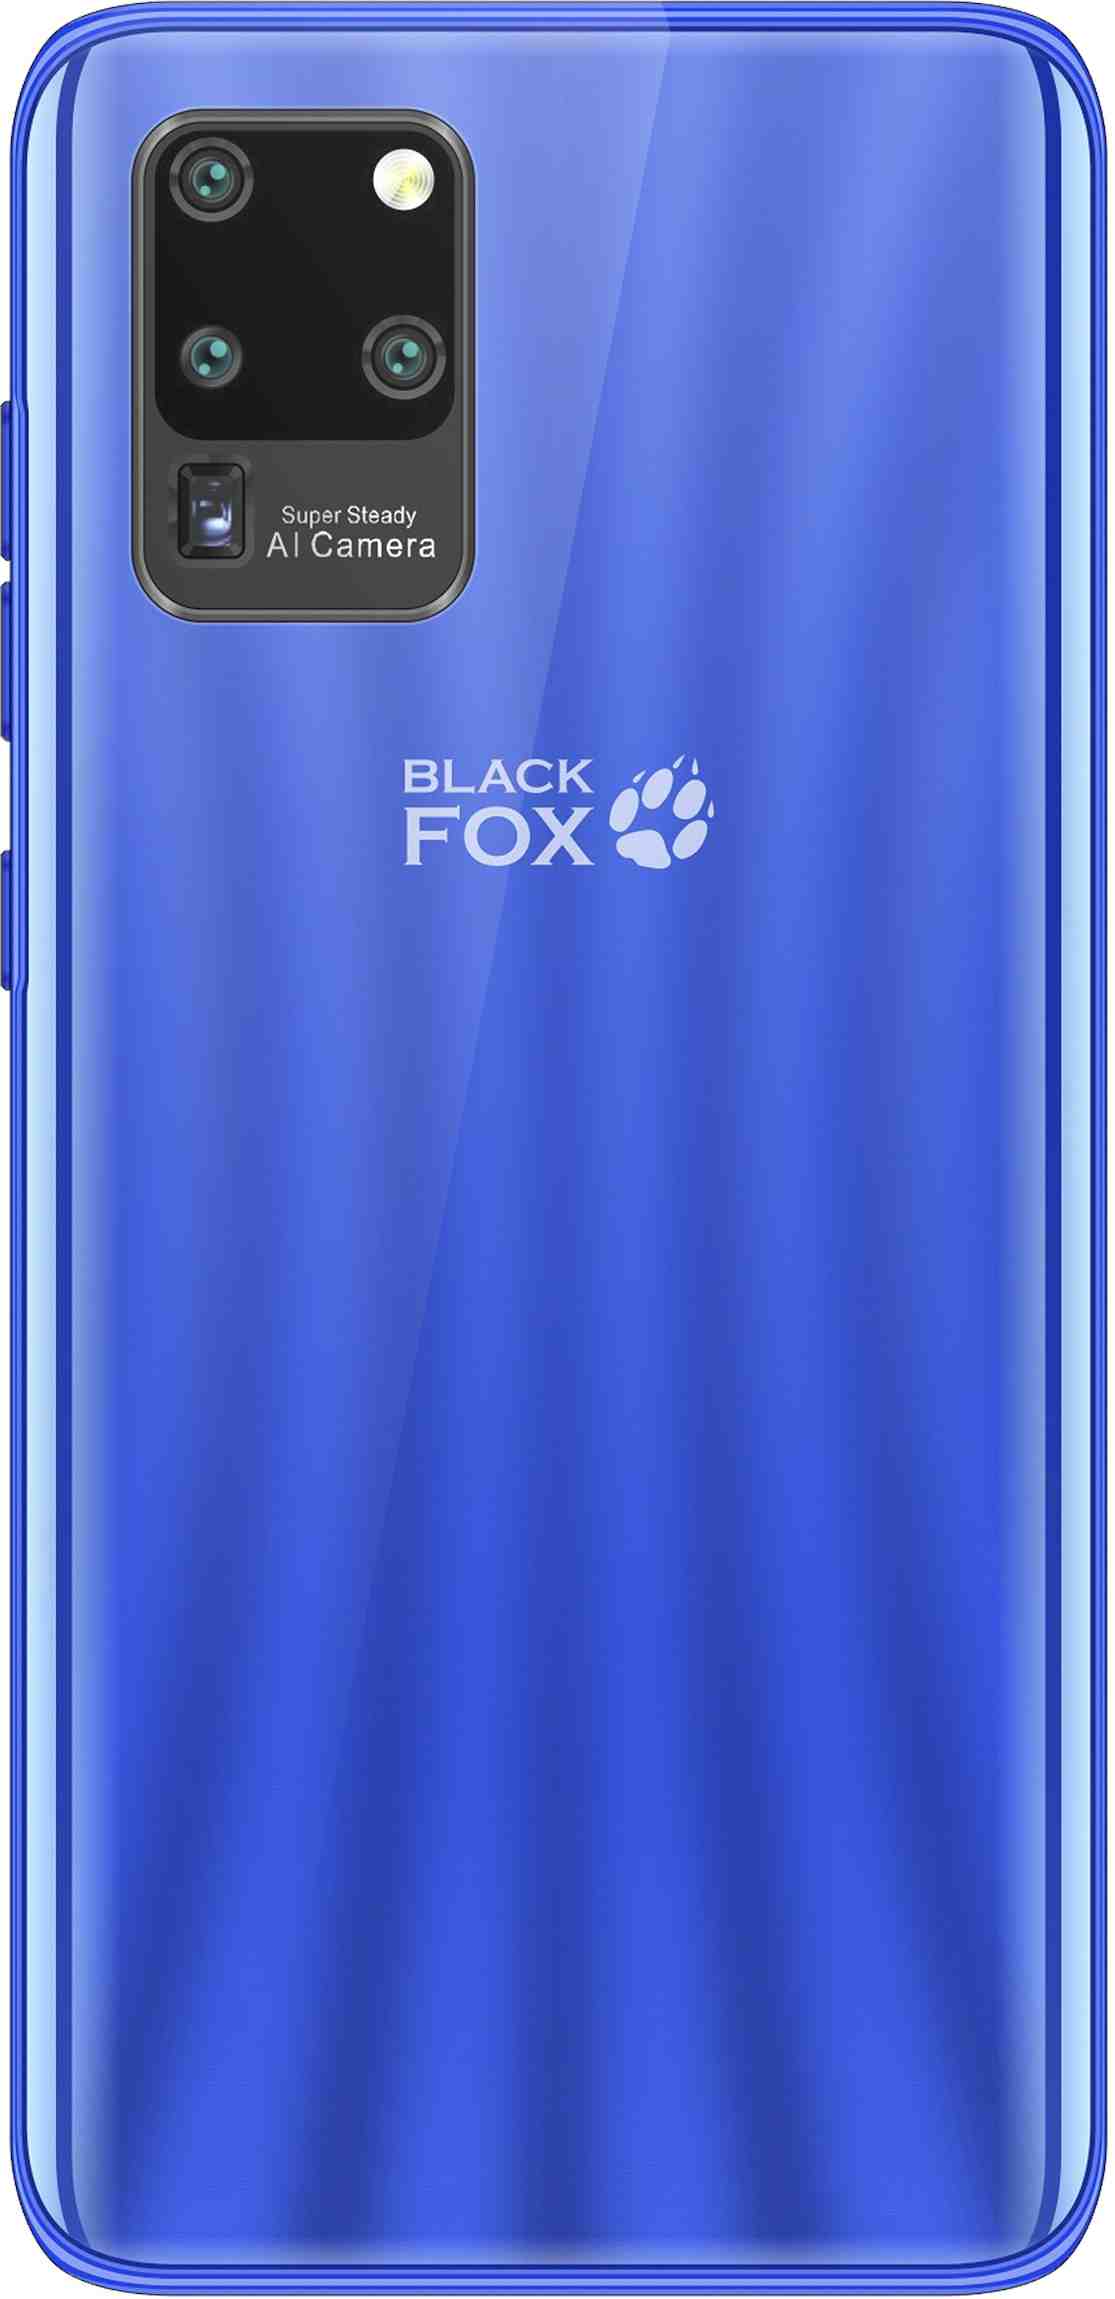 Black Fox B2 Fox